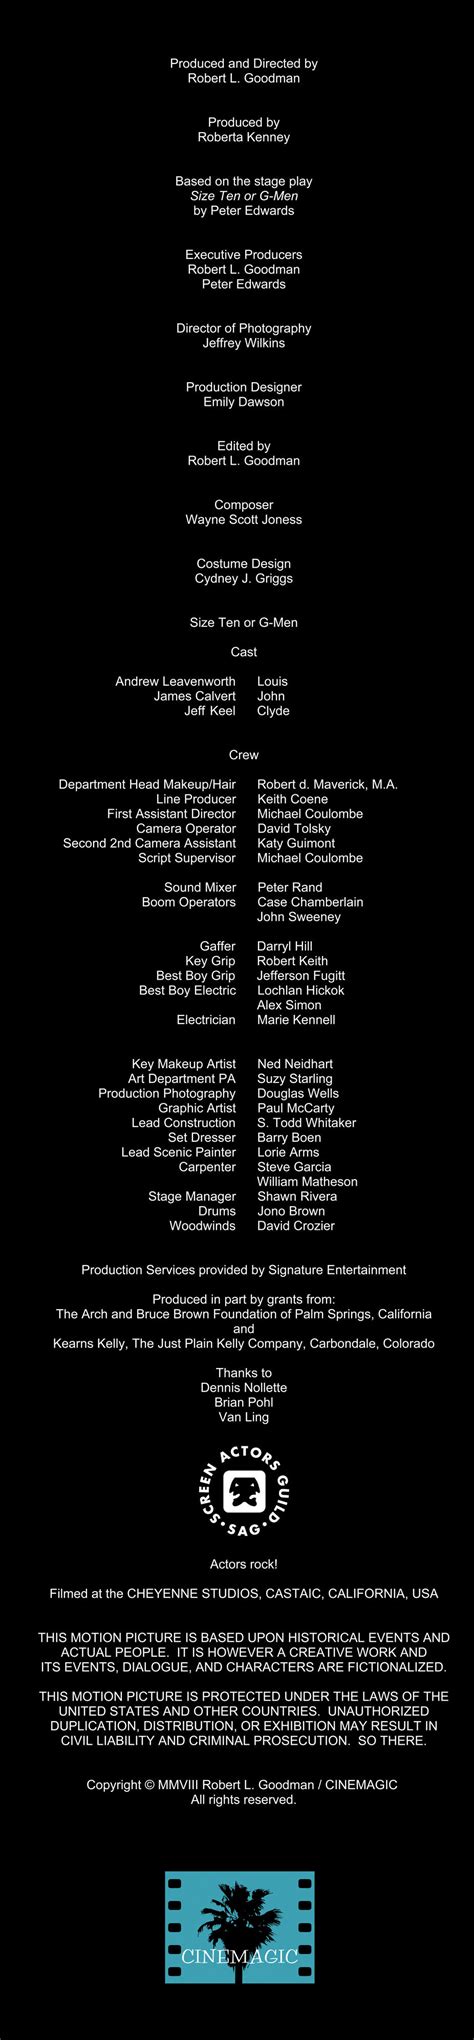 Michael Kors lyrics credits, cast, crew of song